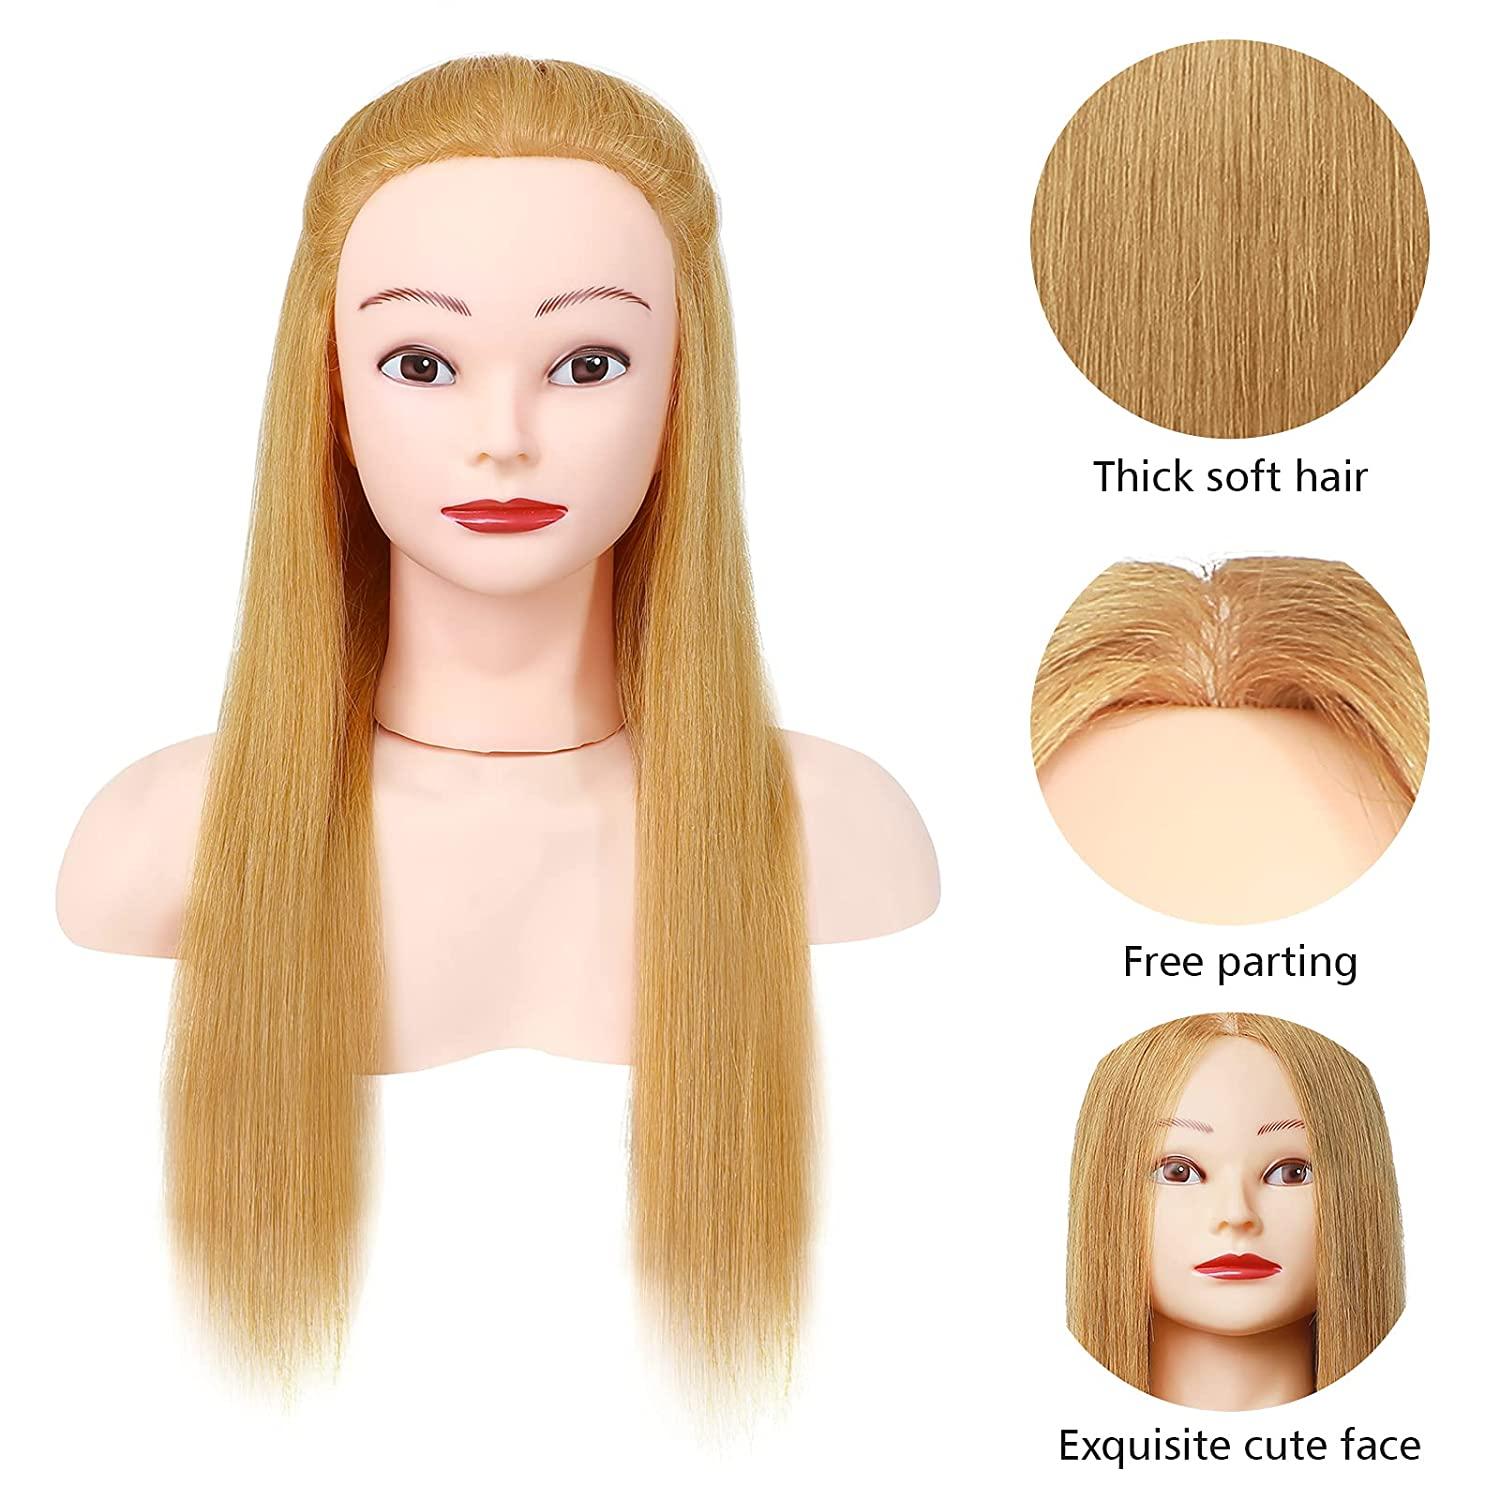  Mannequin Head with Hair 26 inch Long Hair Doll Make